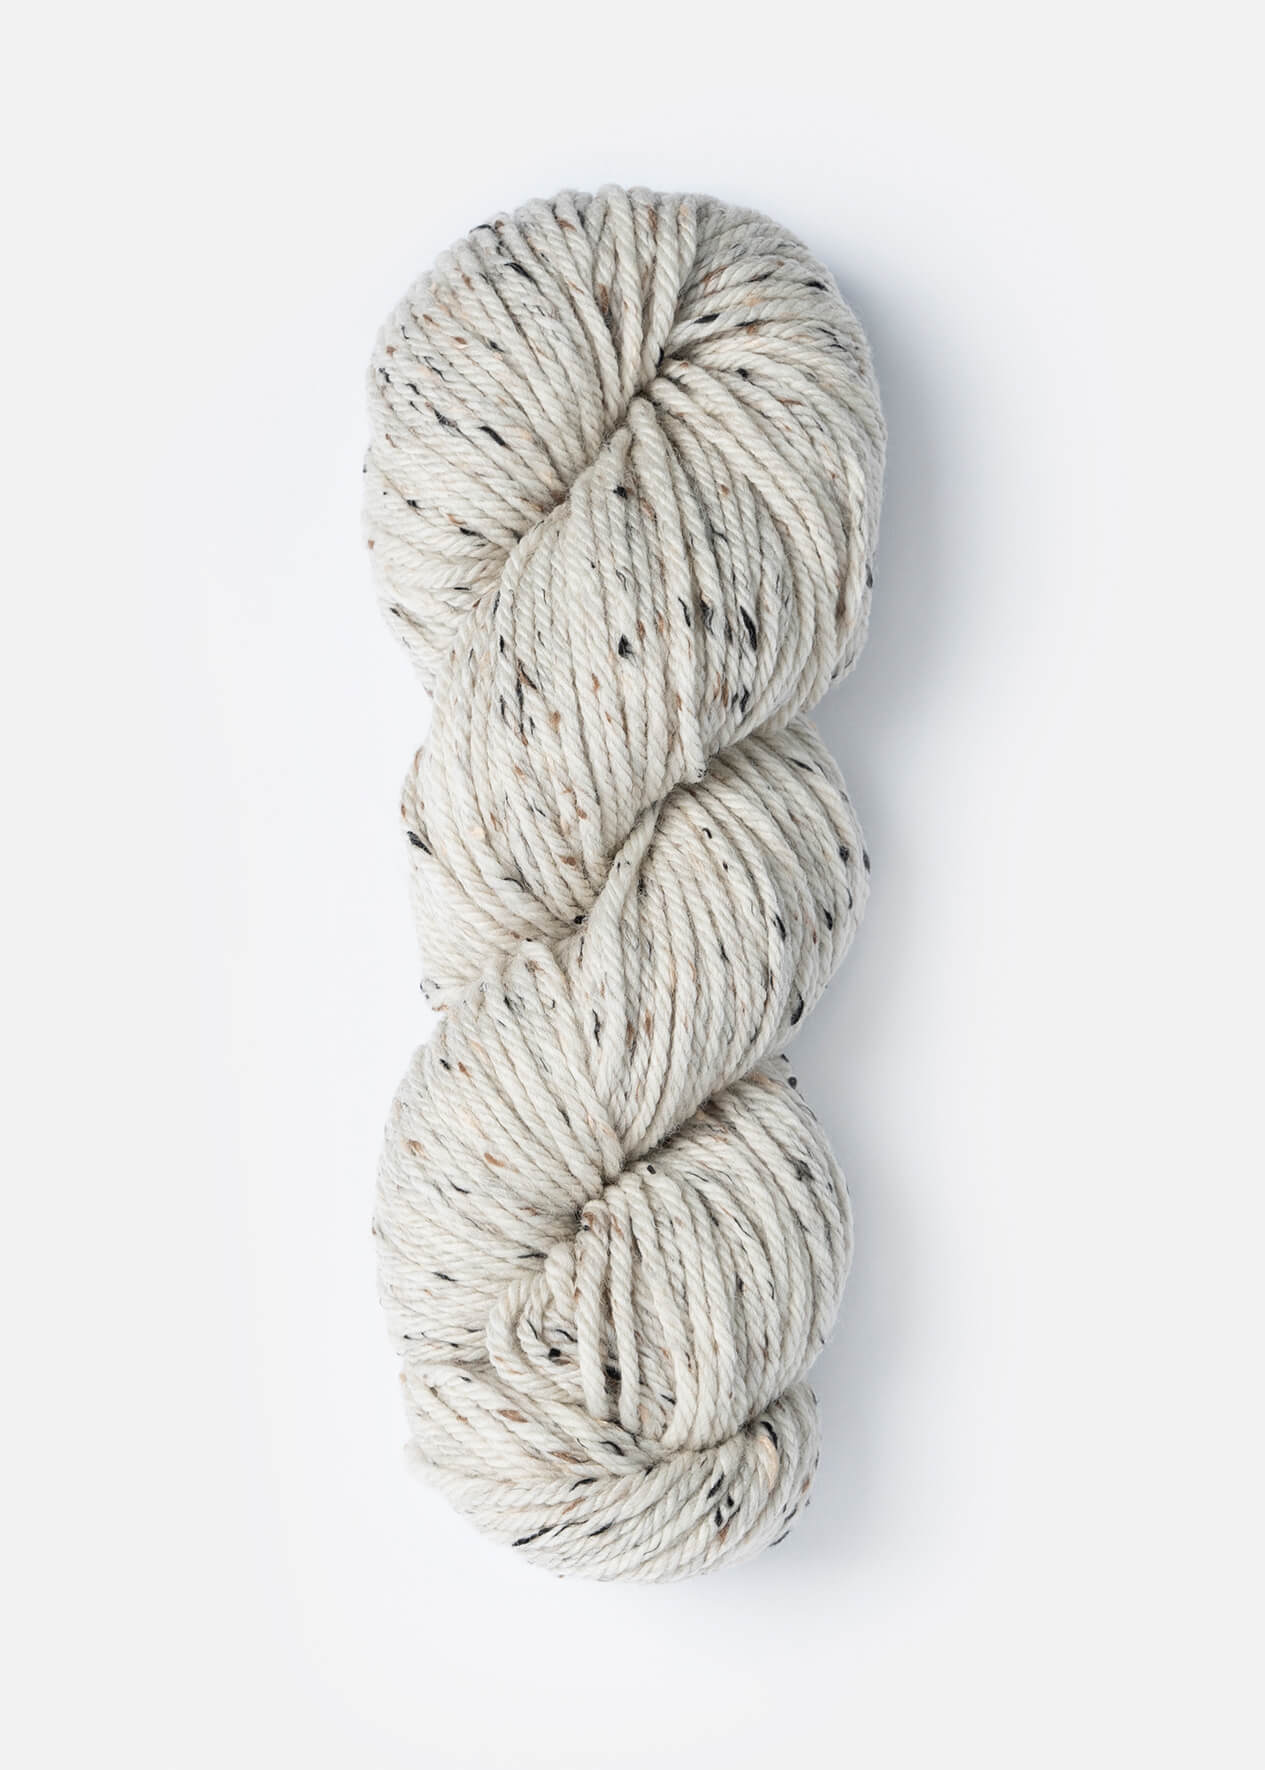 Blue Sky Fibers - Woolstok Tweed - Rolled Oats